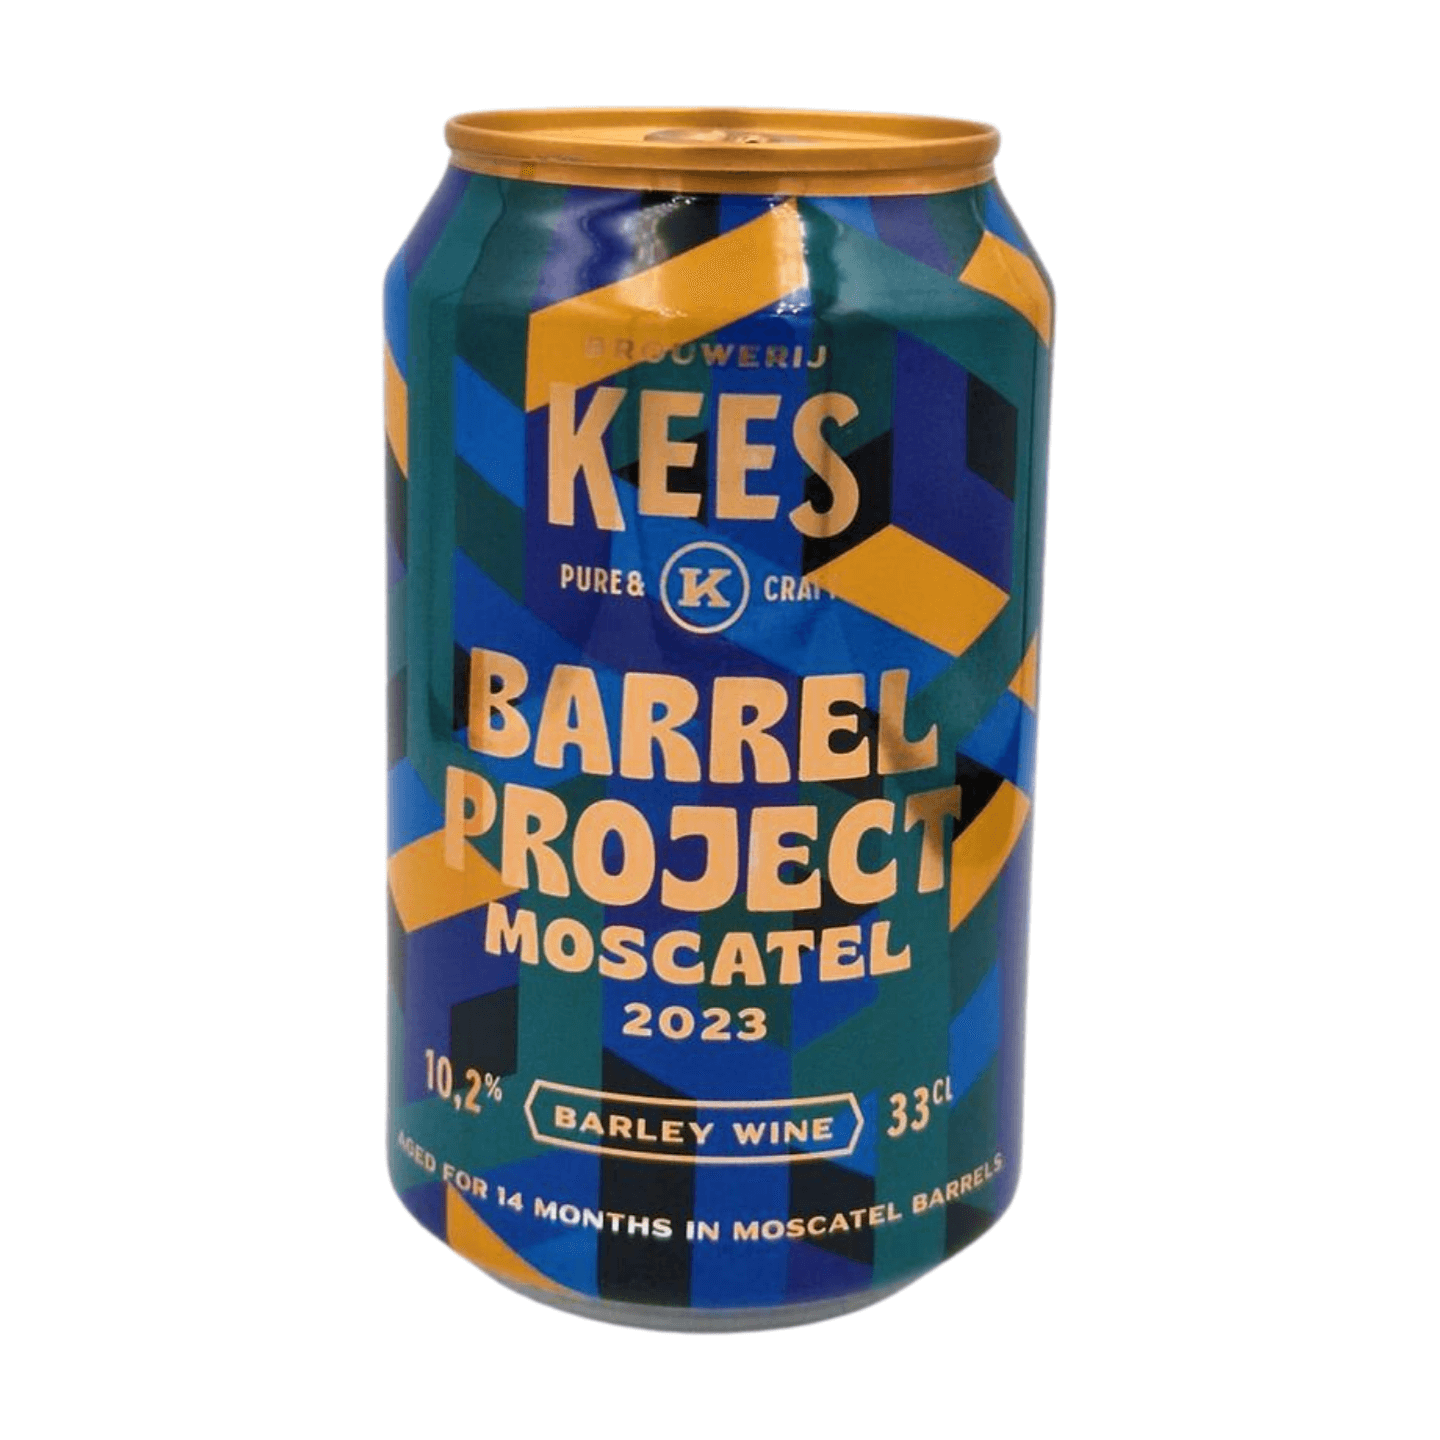 Kees Barrel Project Moscatel 2023 | Moscatel BA Barley Wine